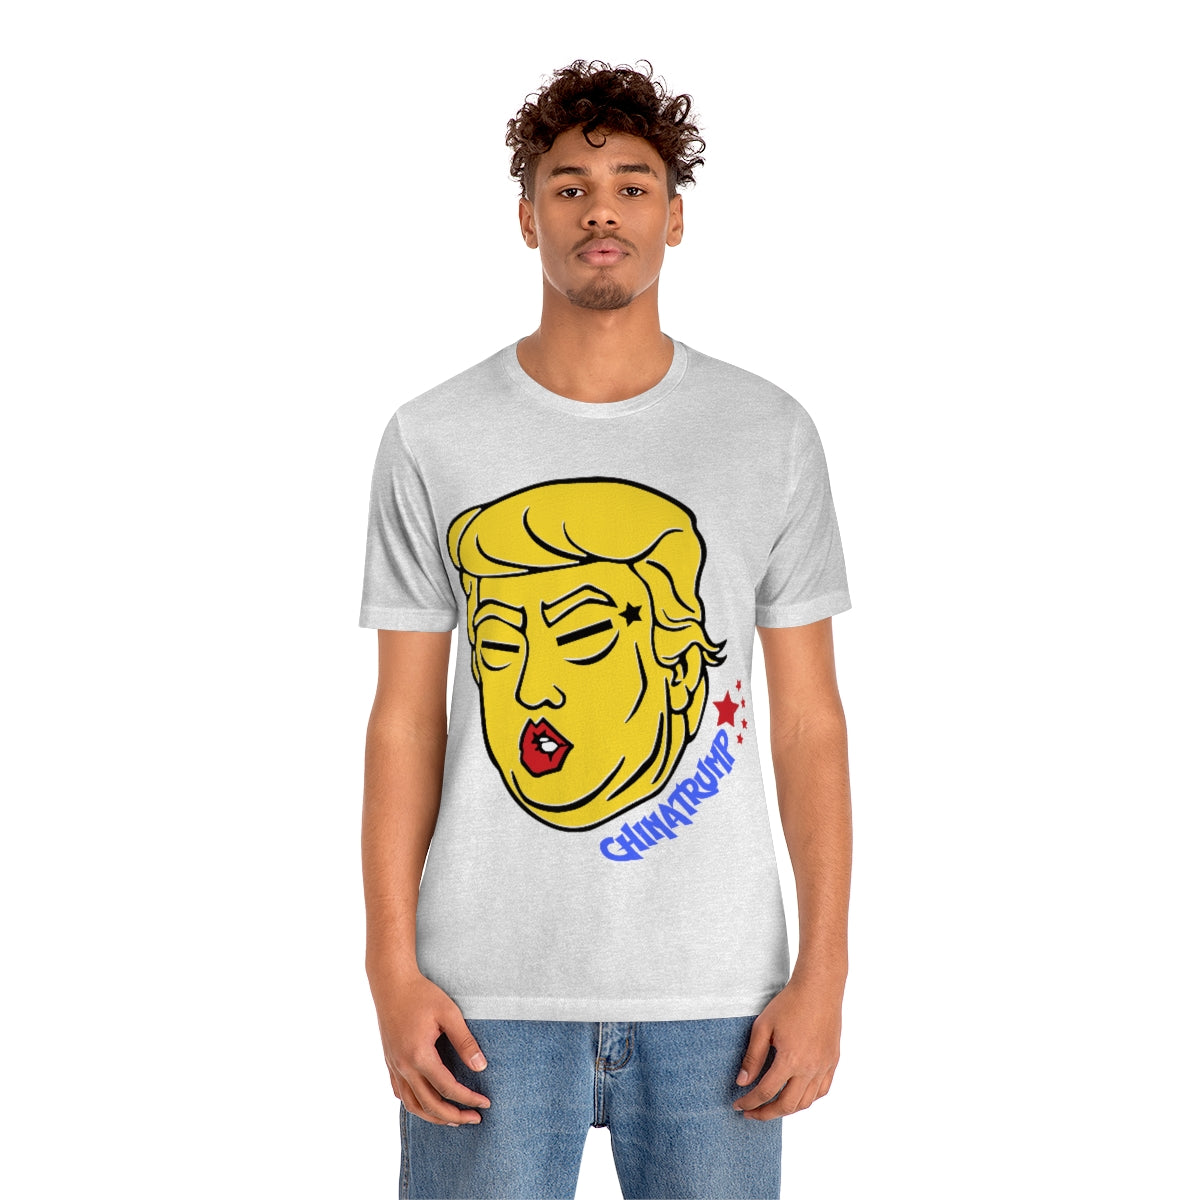 China-Trump - Trump, Chinese Dictator | Meme unisex T-shirt